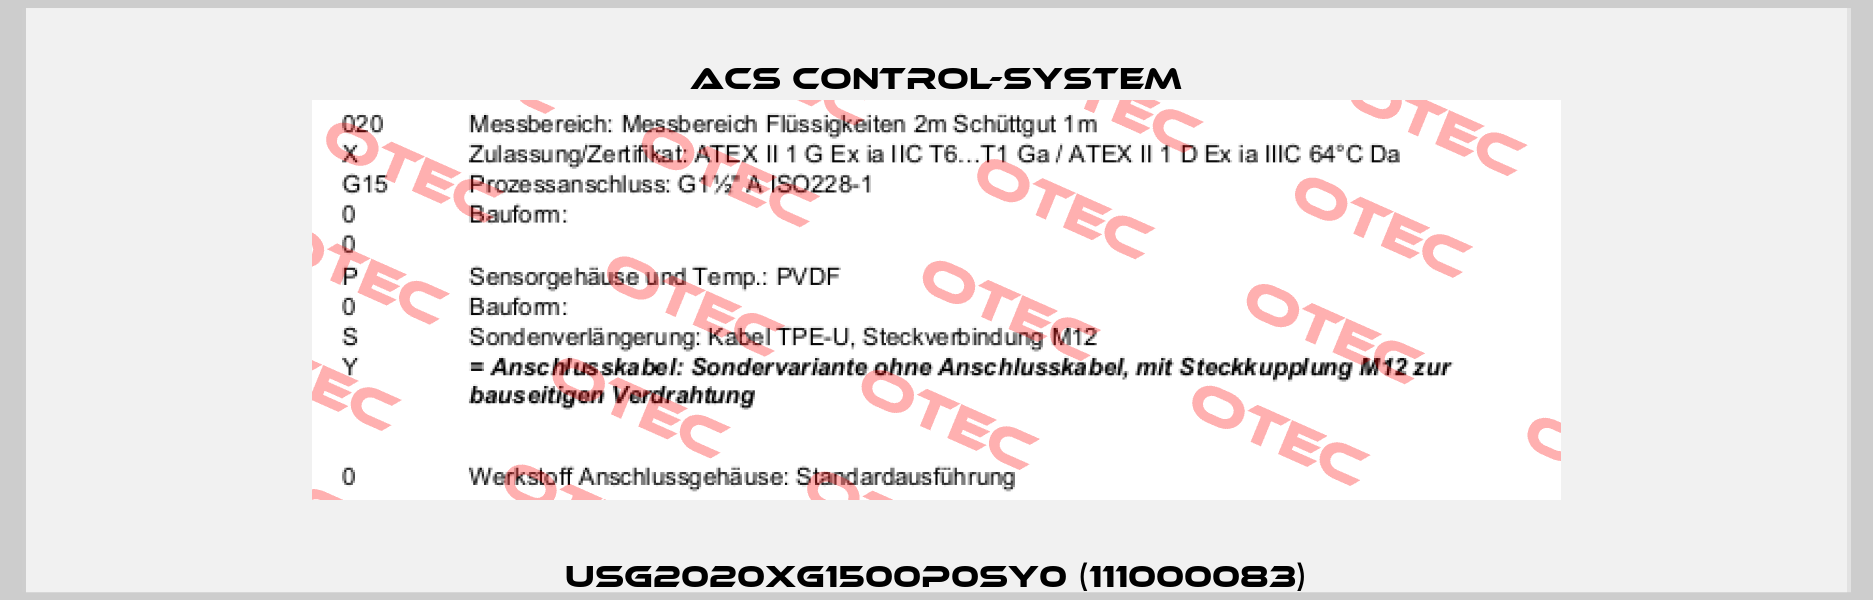 USG2020XG1500P0SY0 (111000083) Acs Control-System